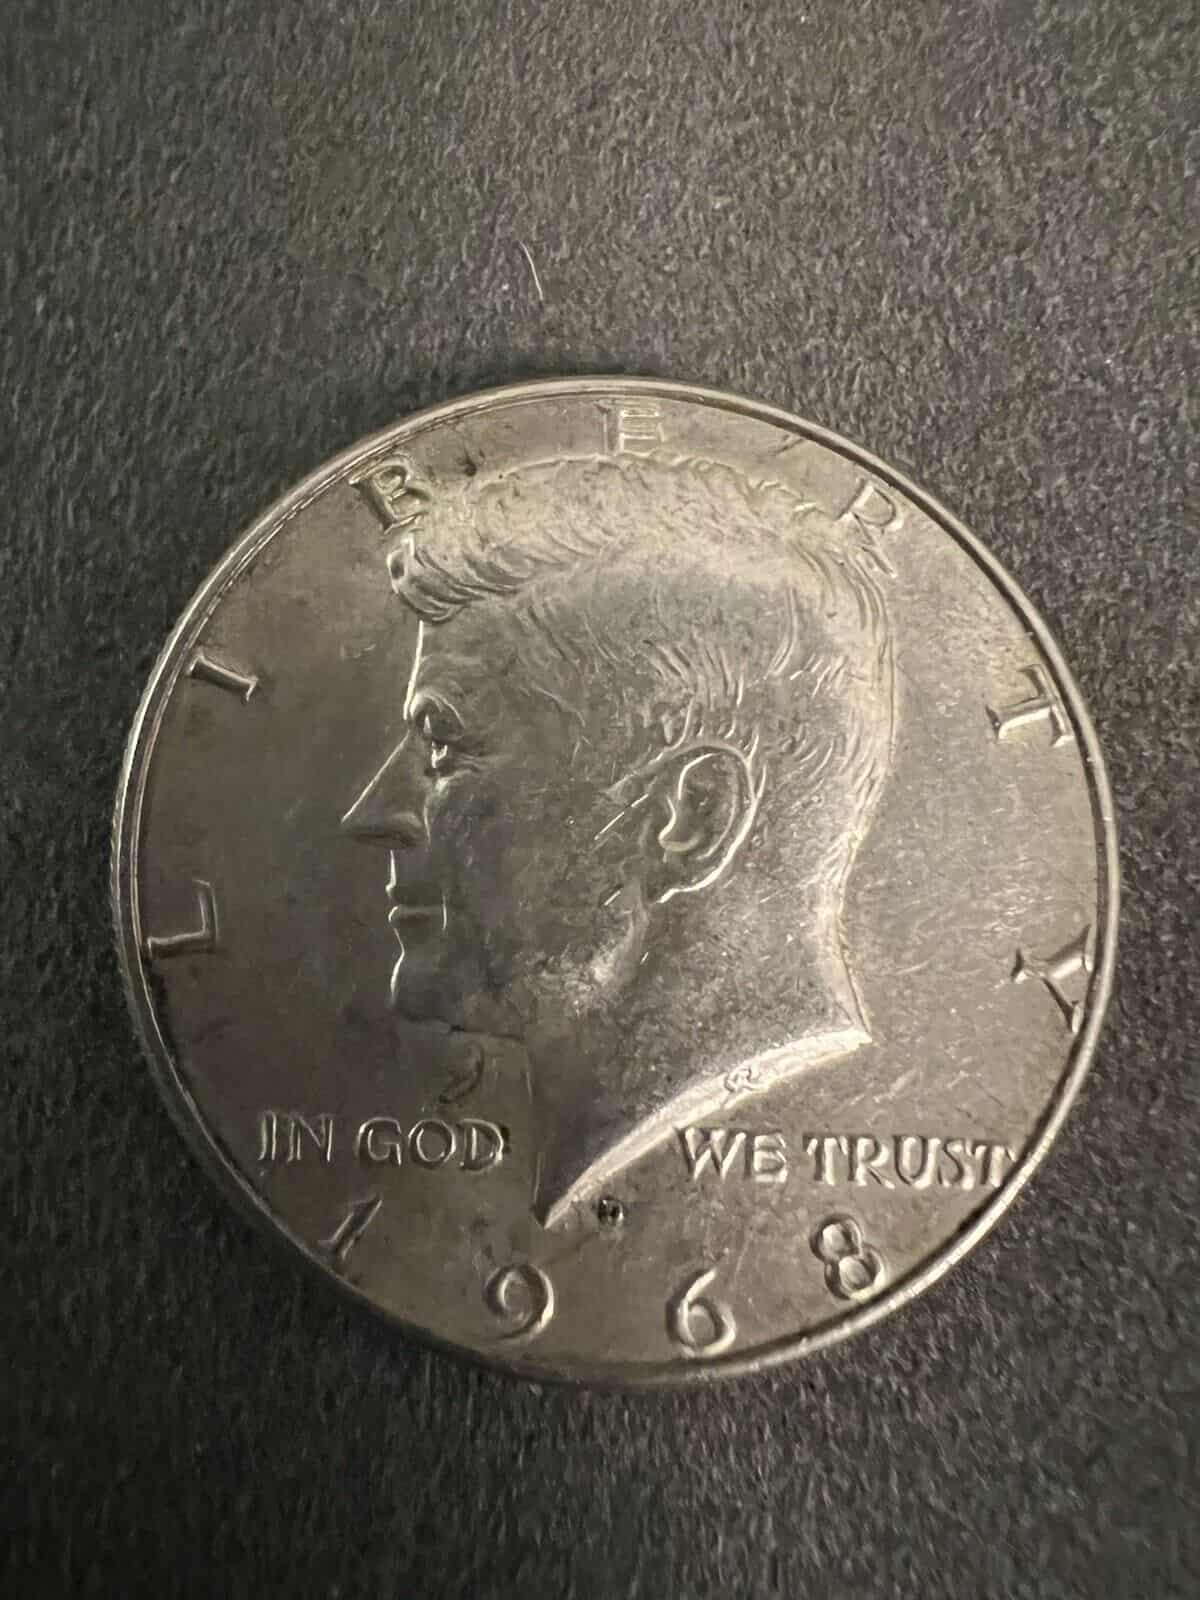 1968 D Mint Mark Half Dollar